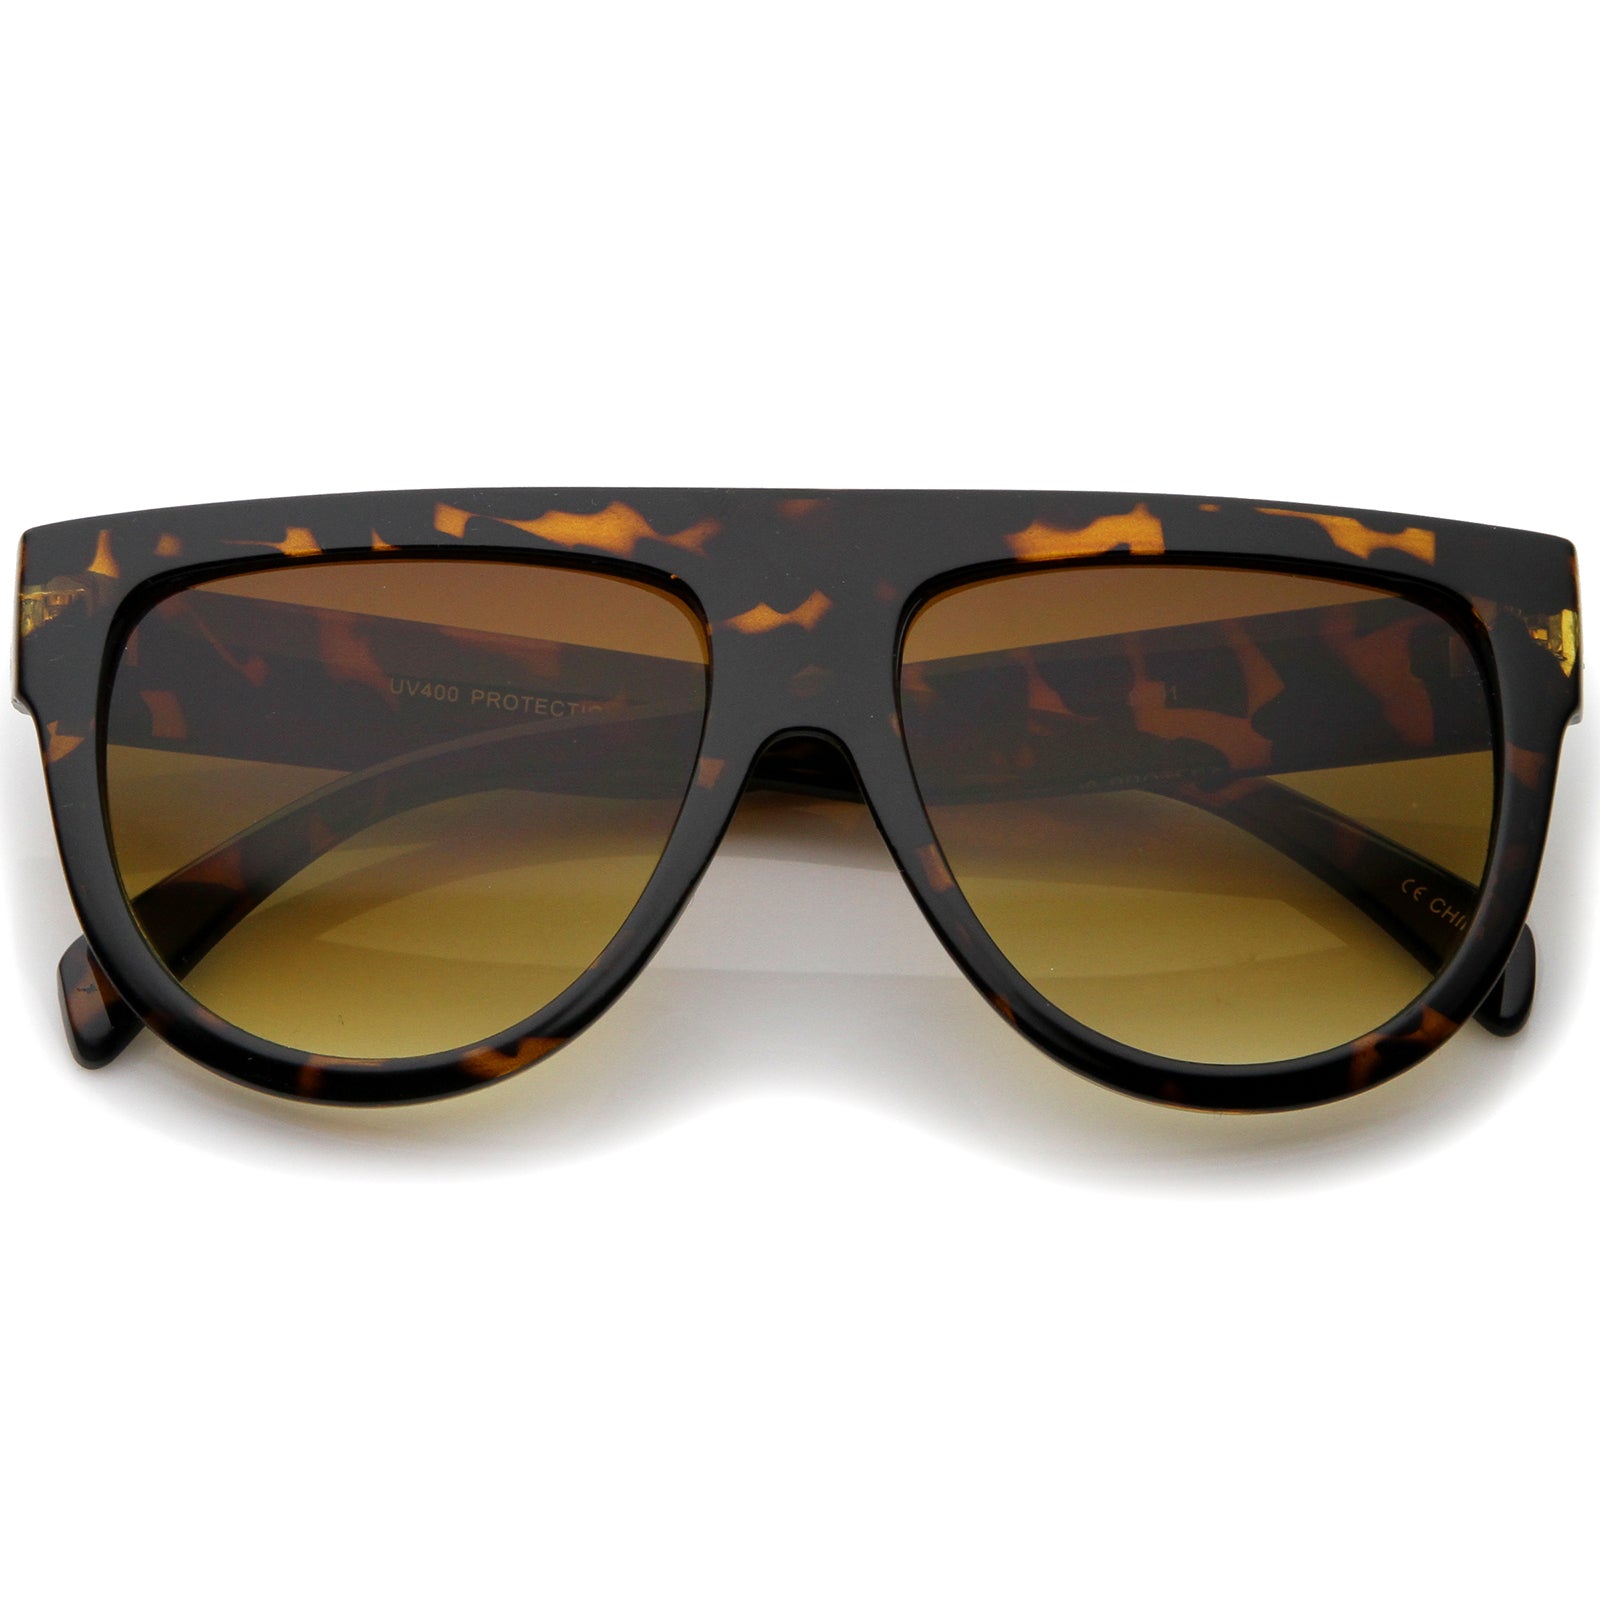 Stylish Half Rimless Aviator Pattern Premium Quality Gold Black Sunglasses For Men And Women-Unique and Classy